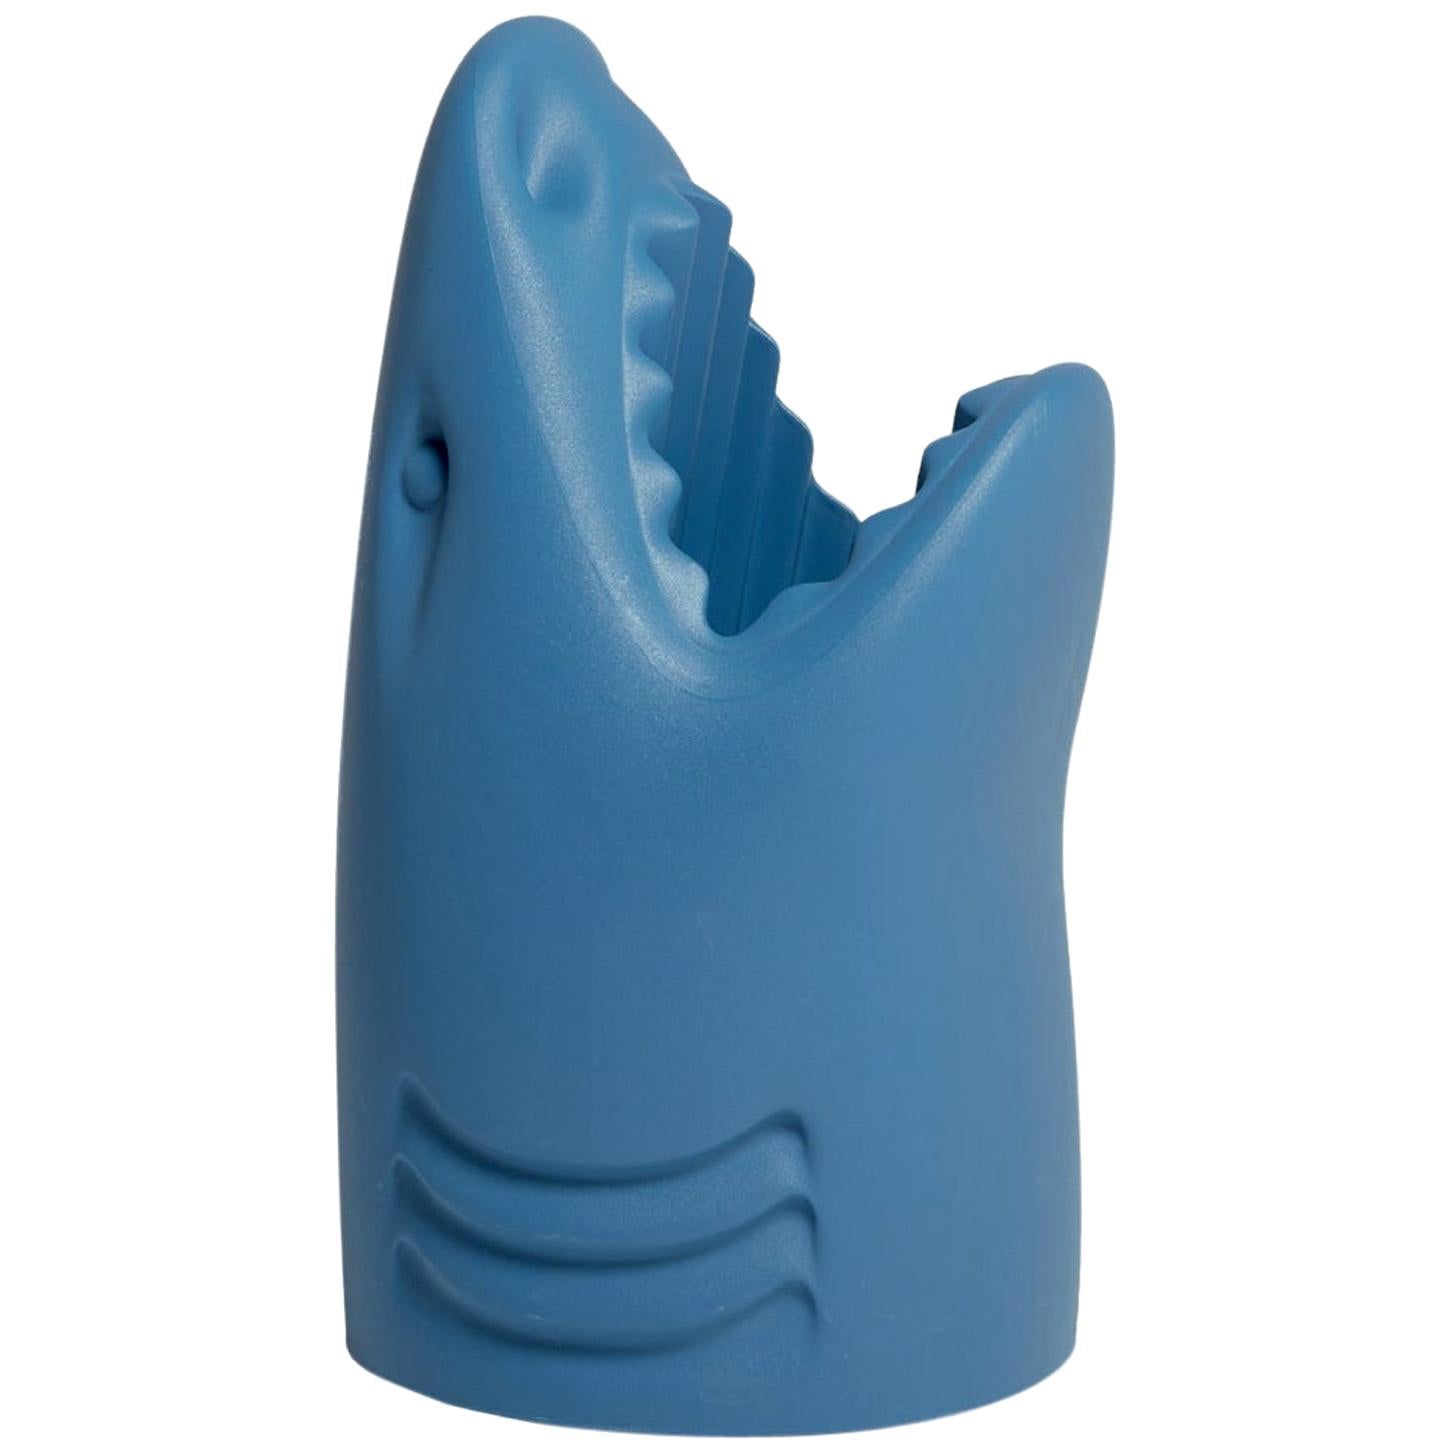 Porte-parapluies « Killer » en forme de requin bleu de Studio Job